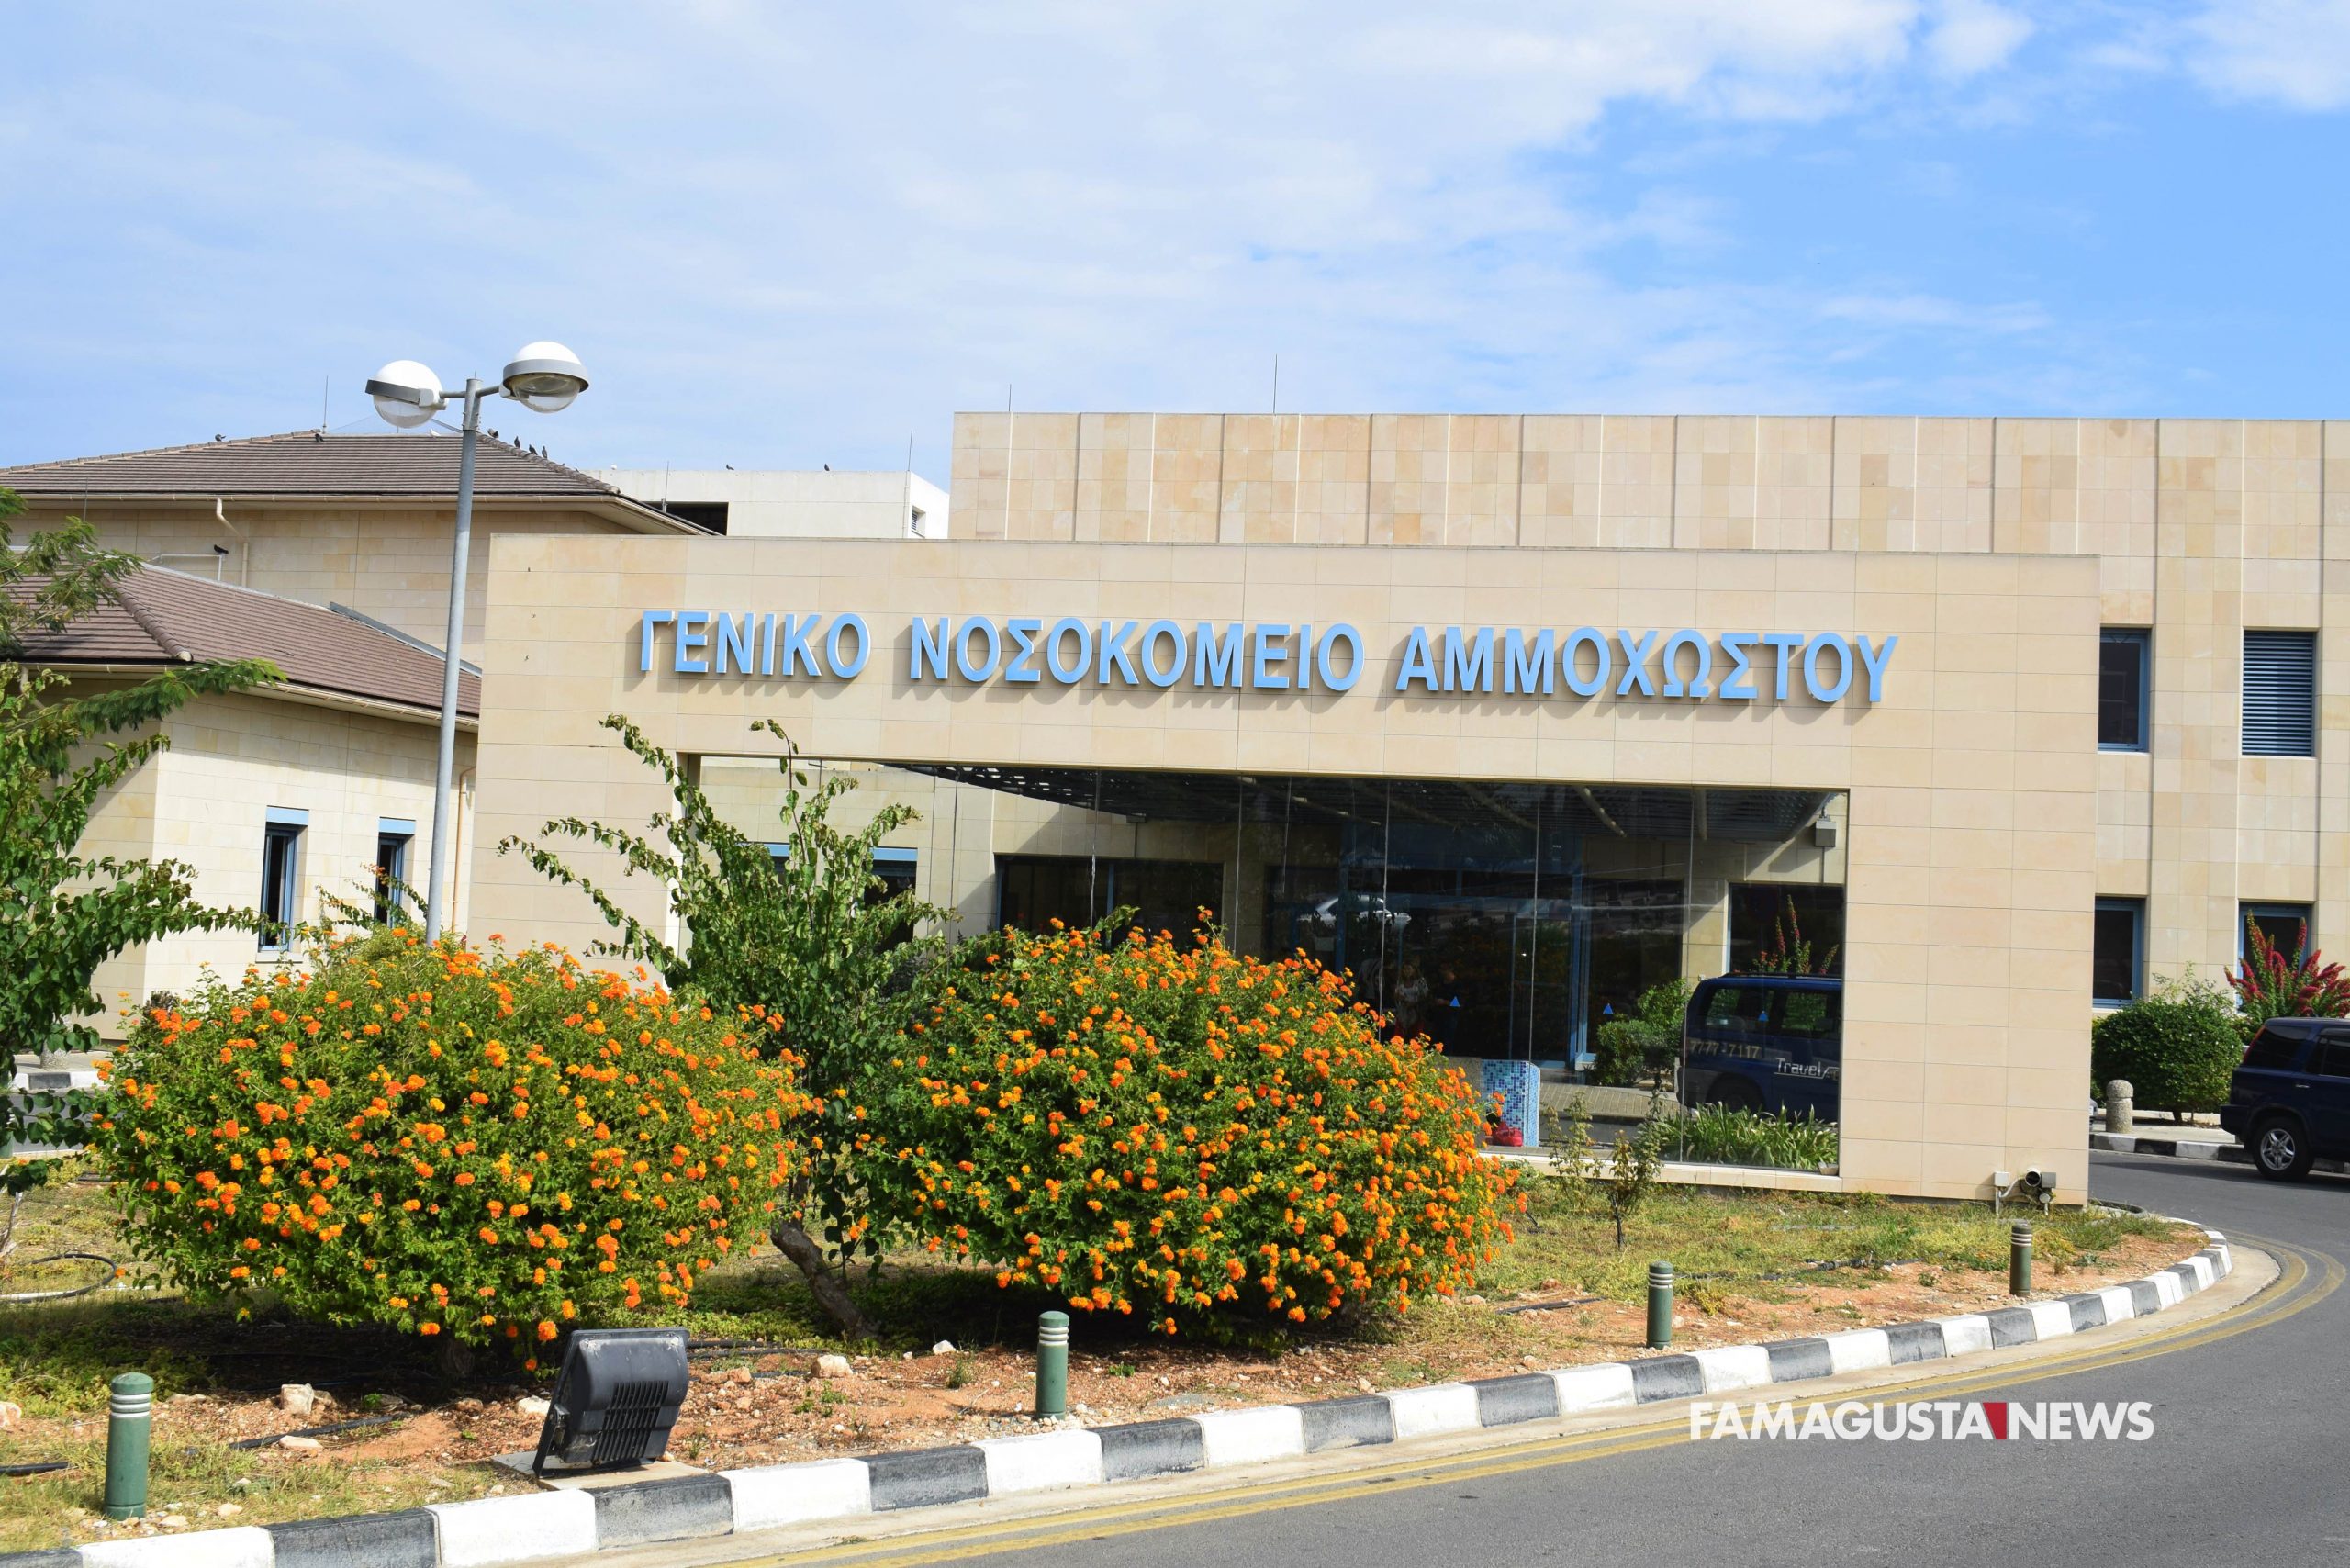 DSC 3546 1 scaled Famagusta General Hospital